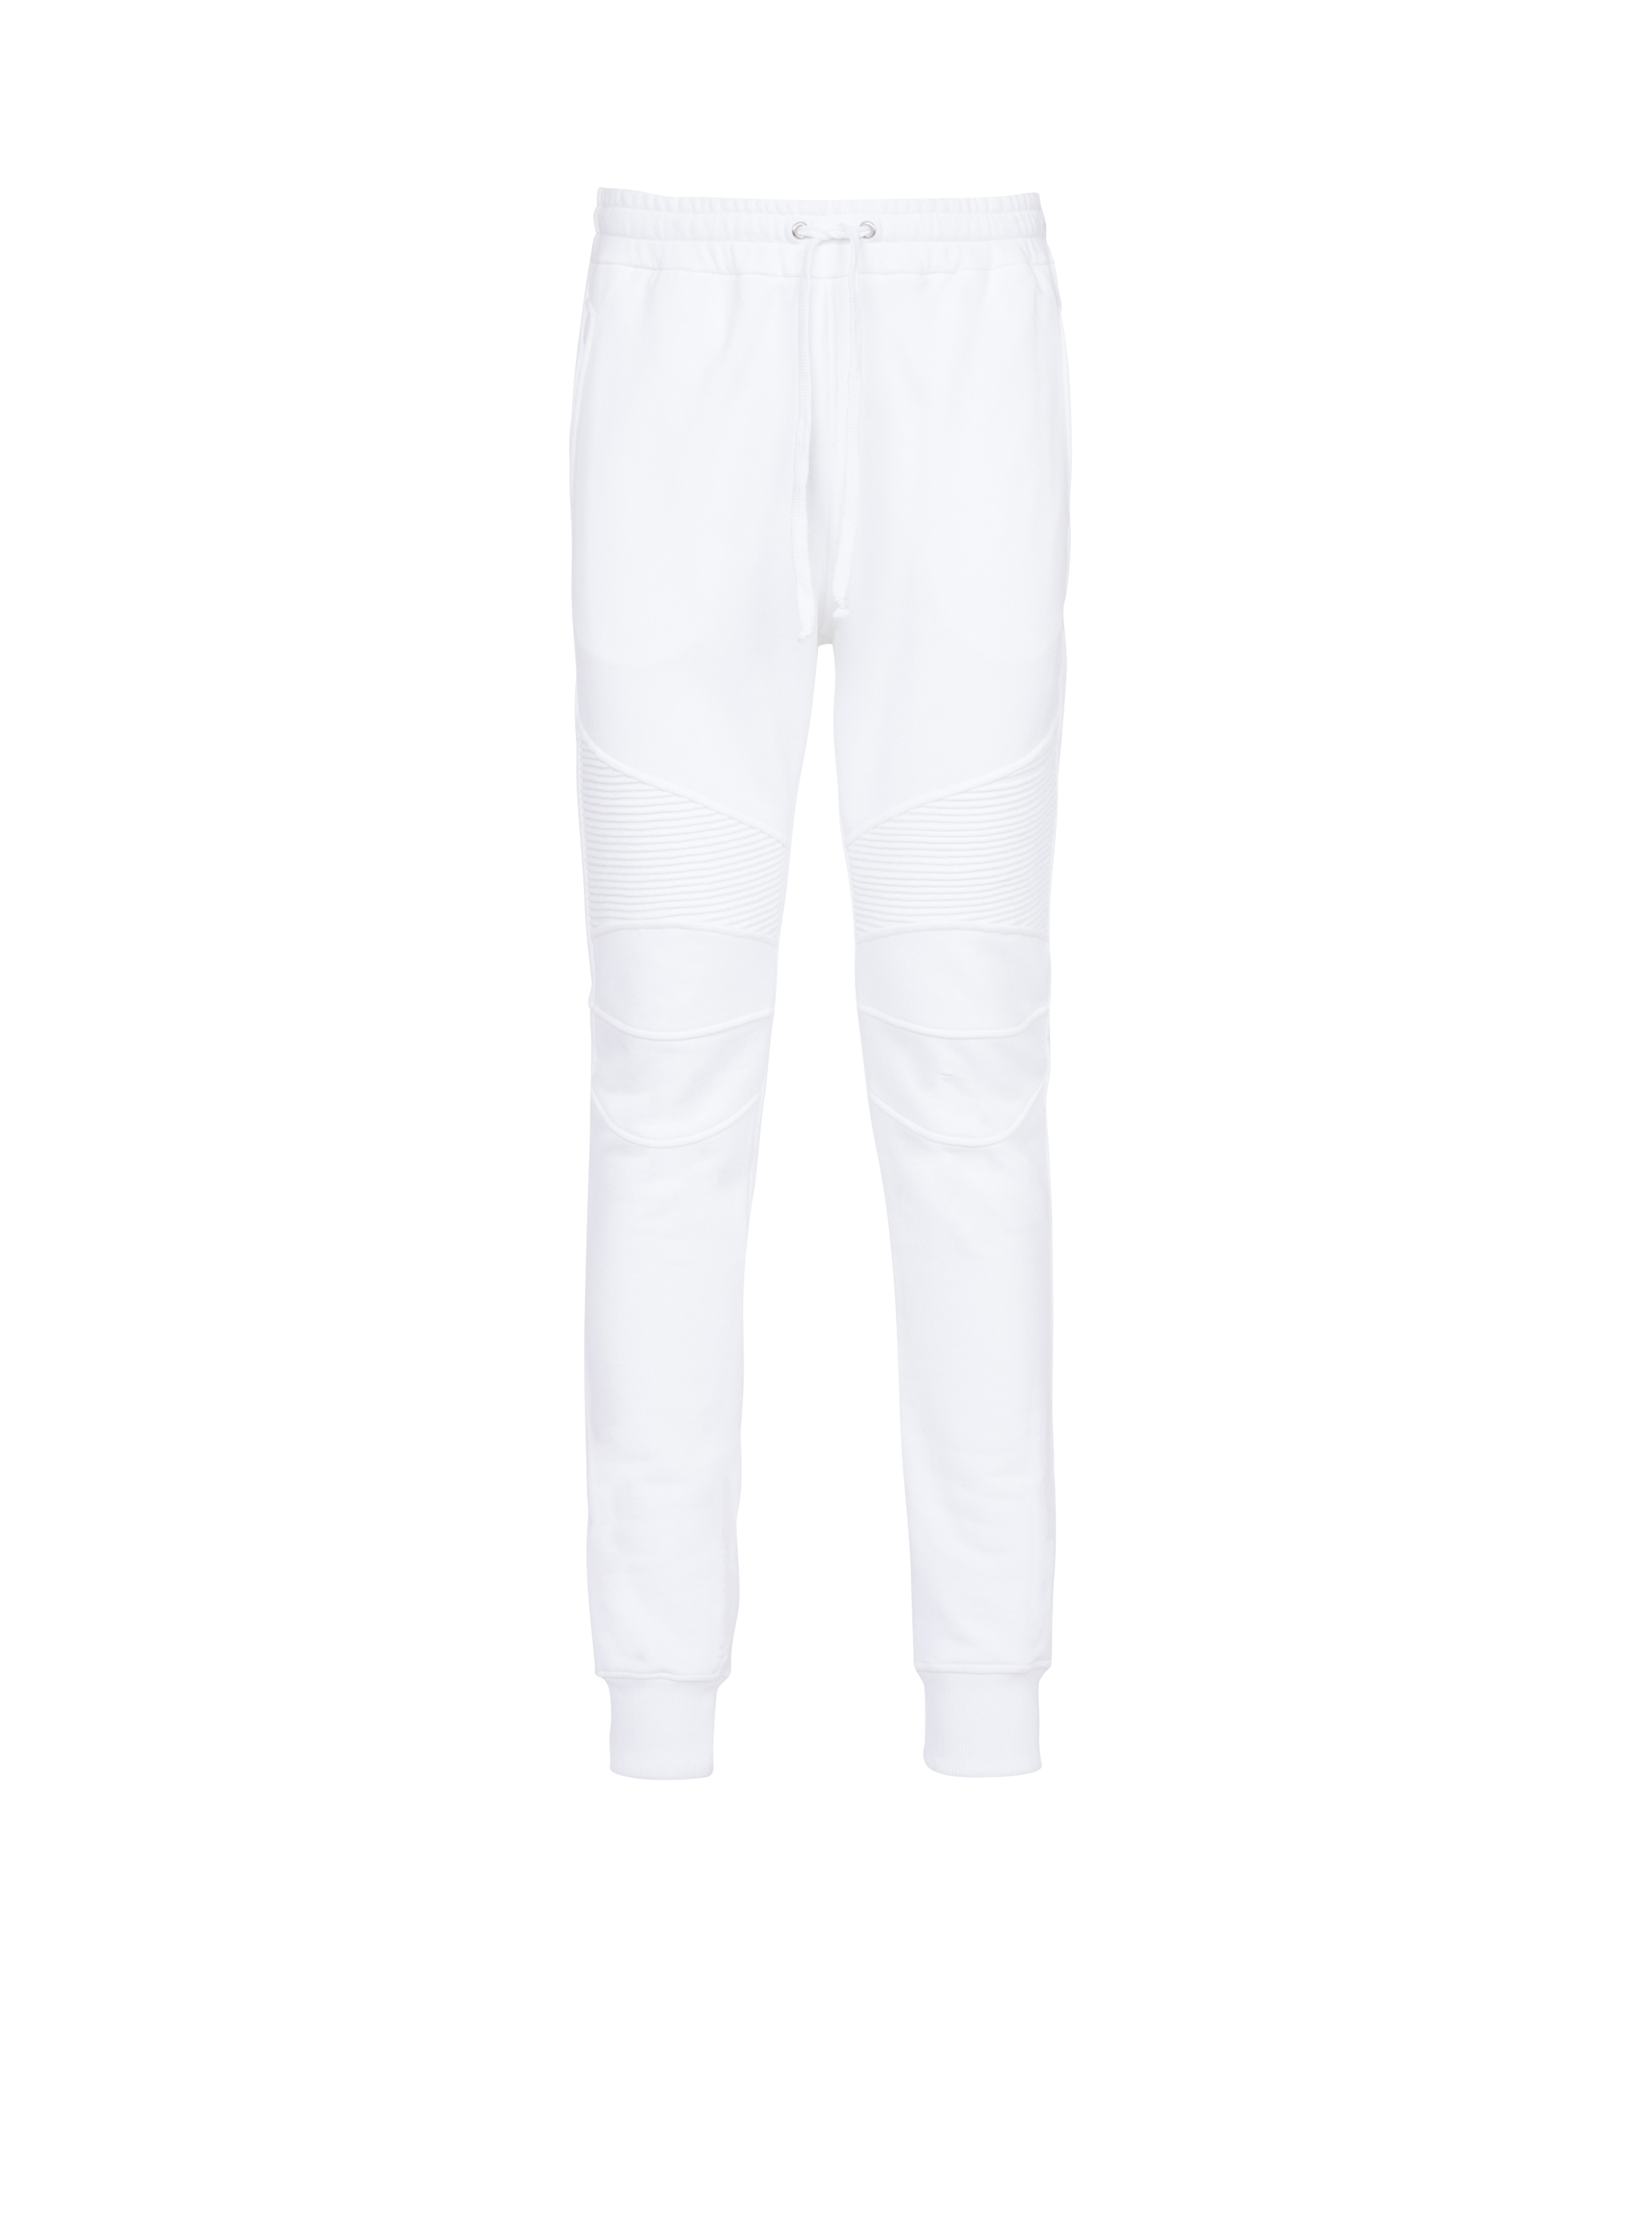 Cotton sweatpants with Balmain Paris logo, white